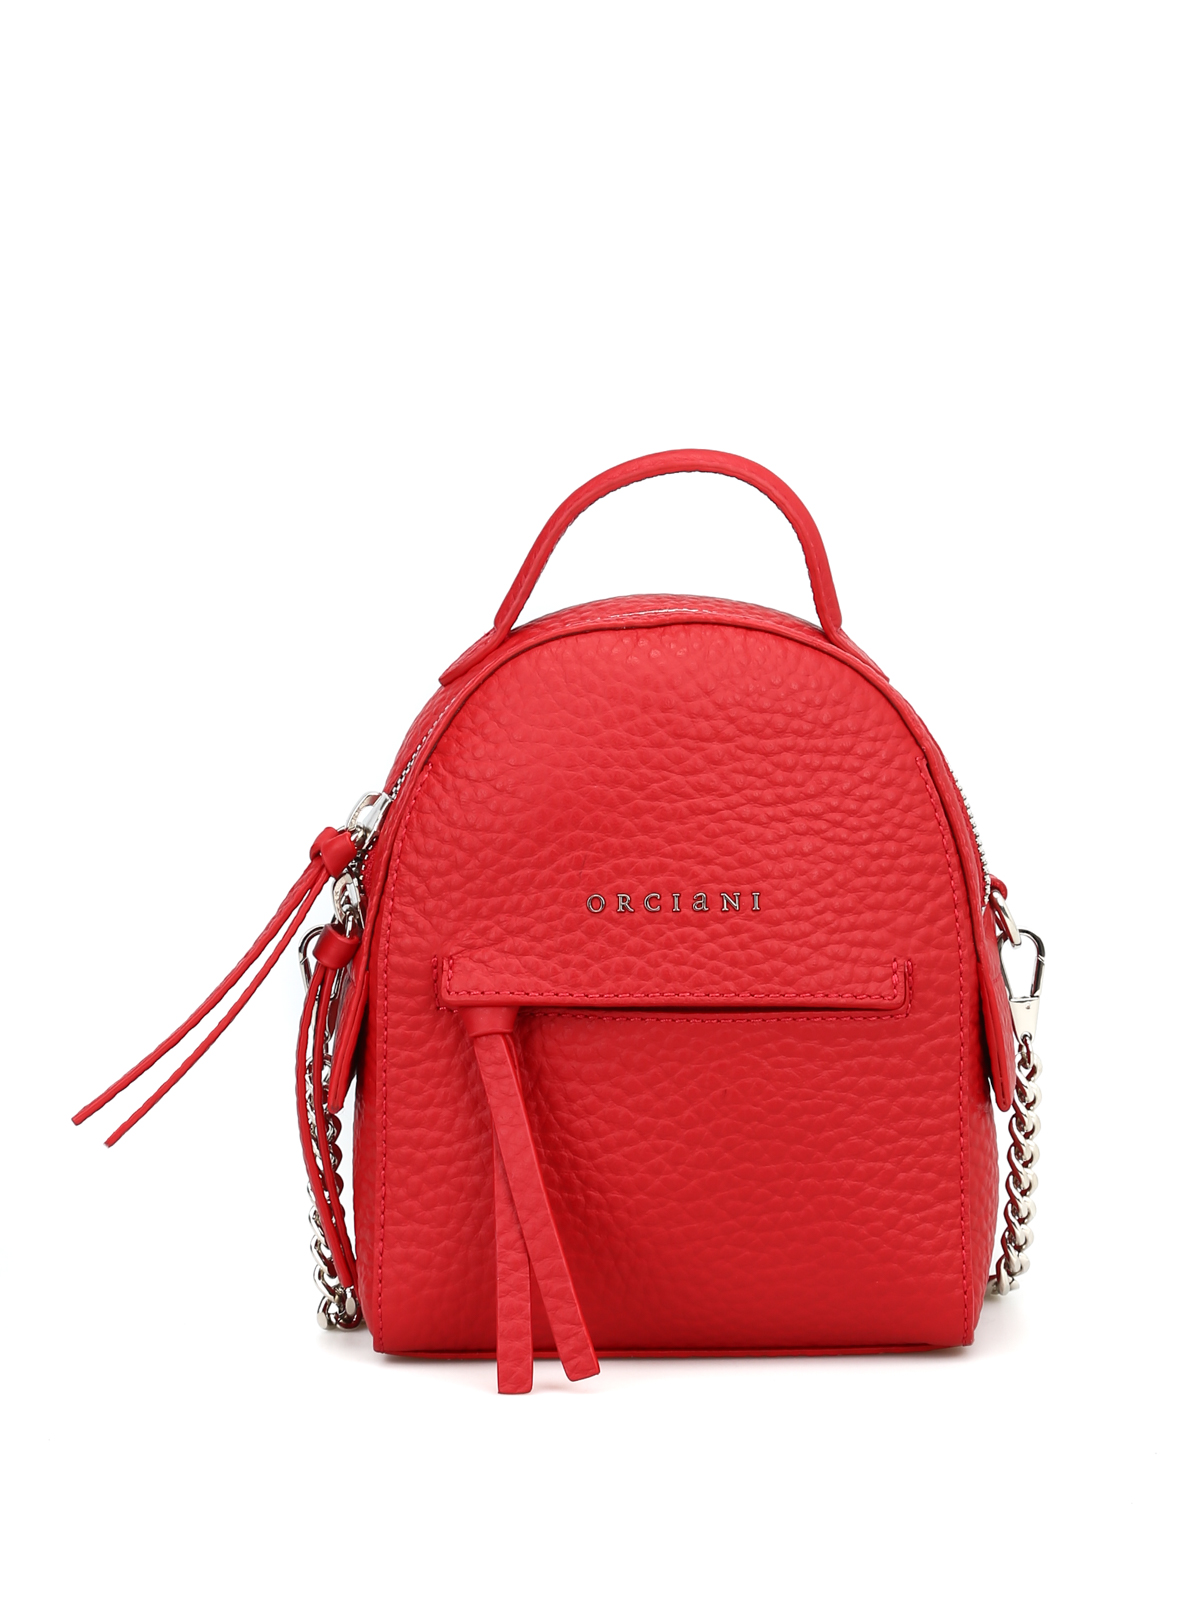 Orciani - Red hammered leather mini backpack - backpacks - SD0149SOFTMARLBORO